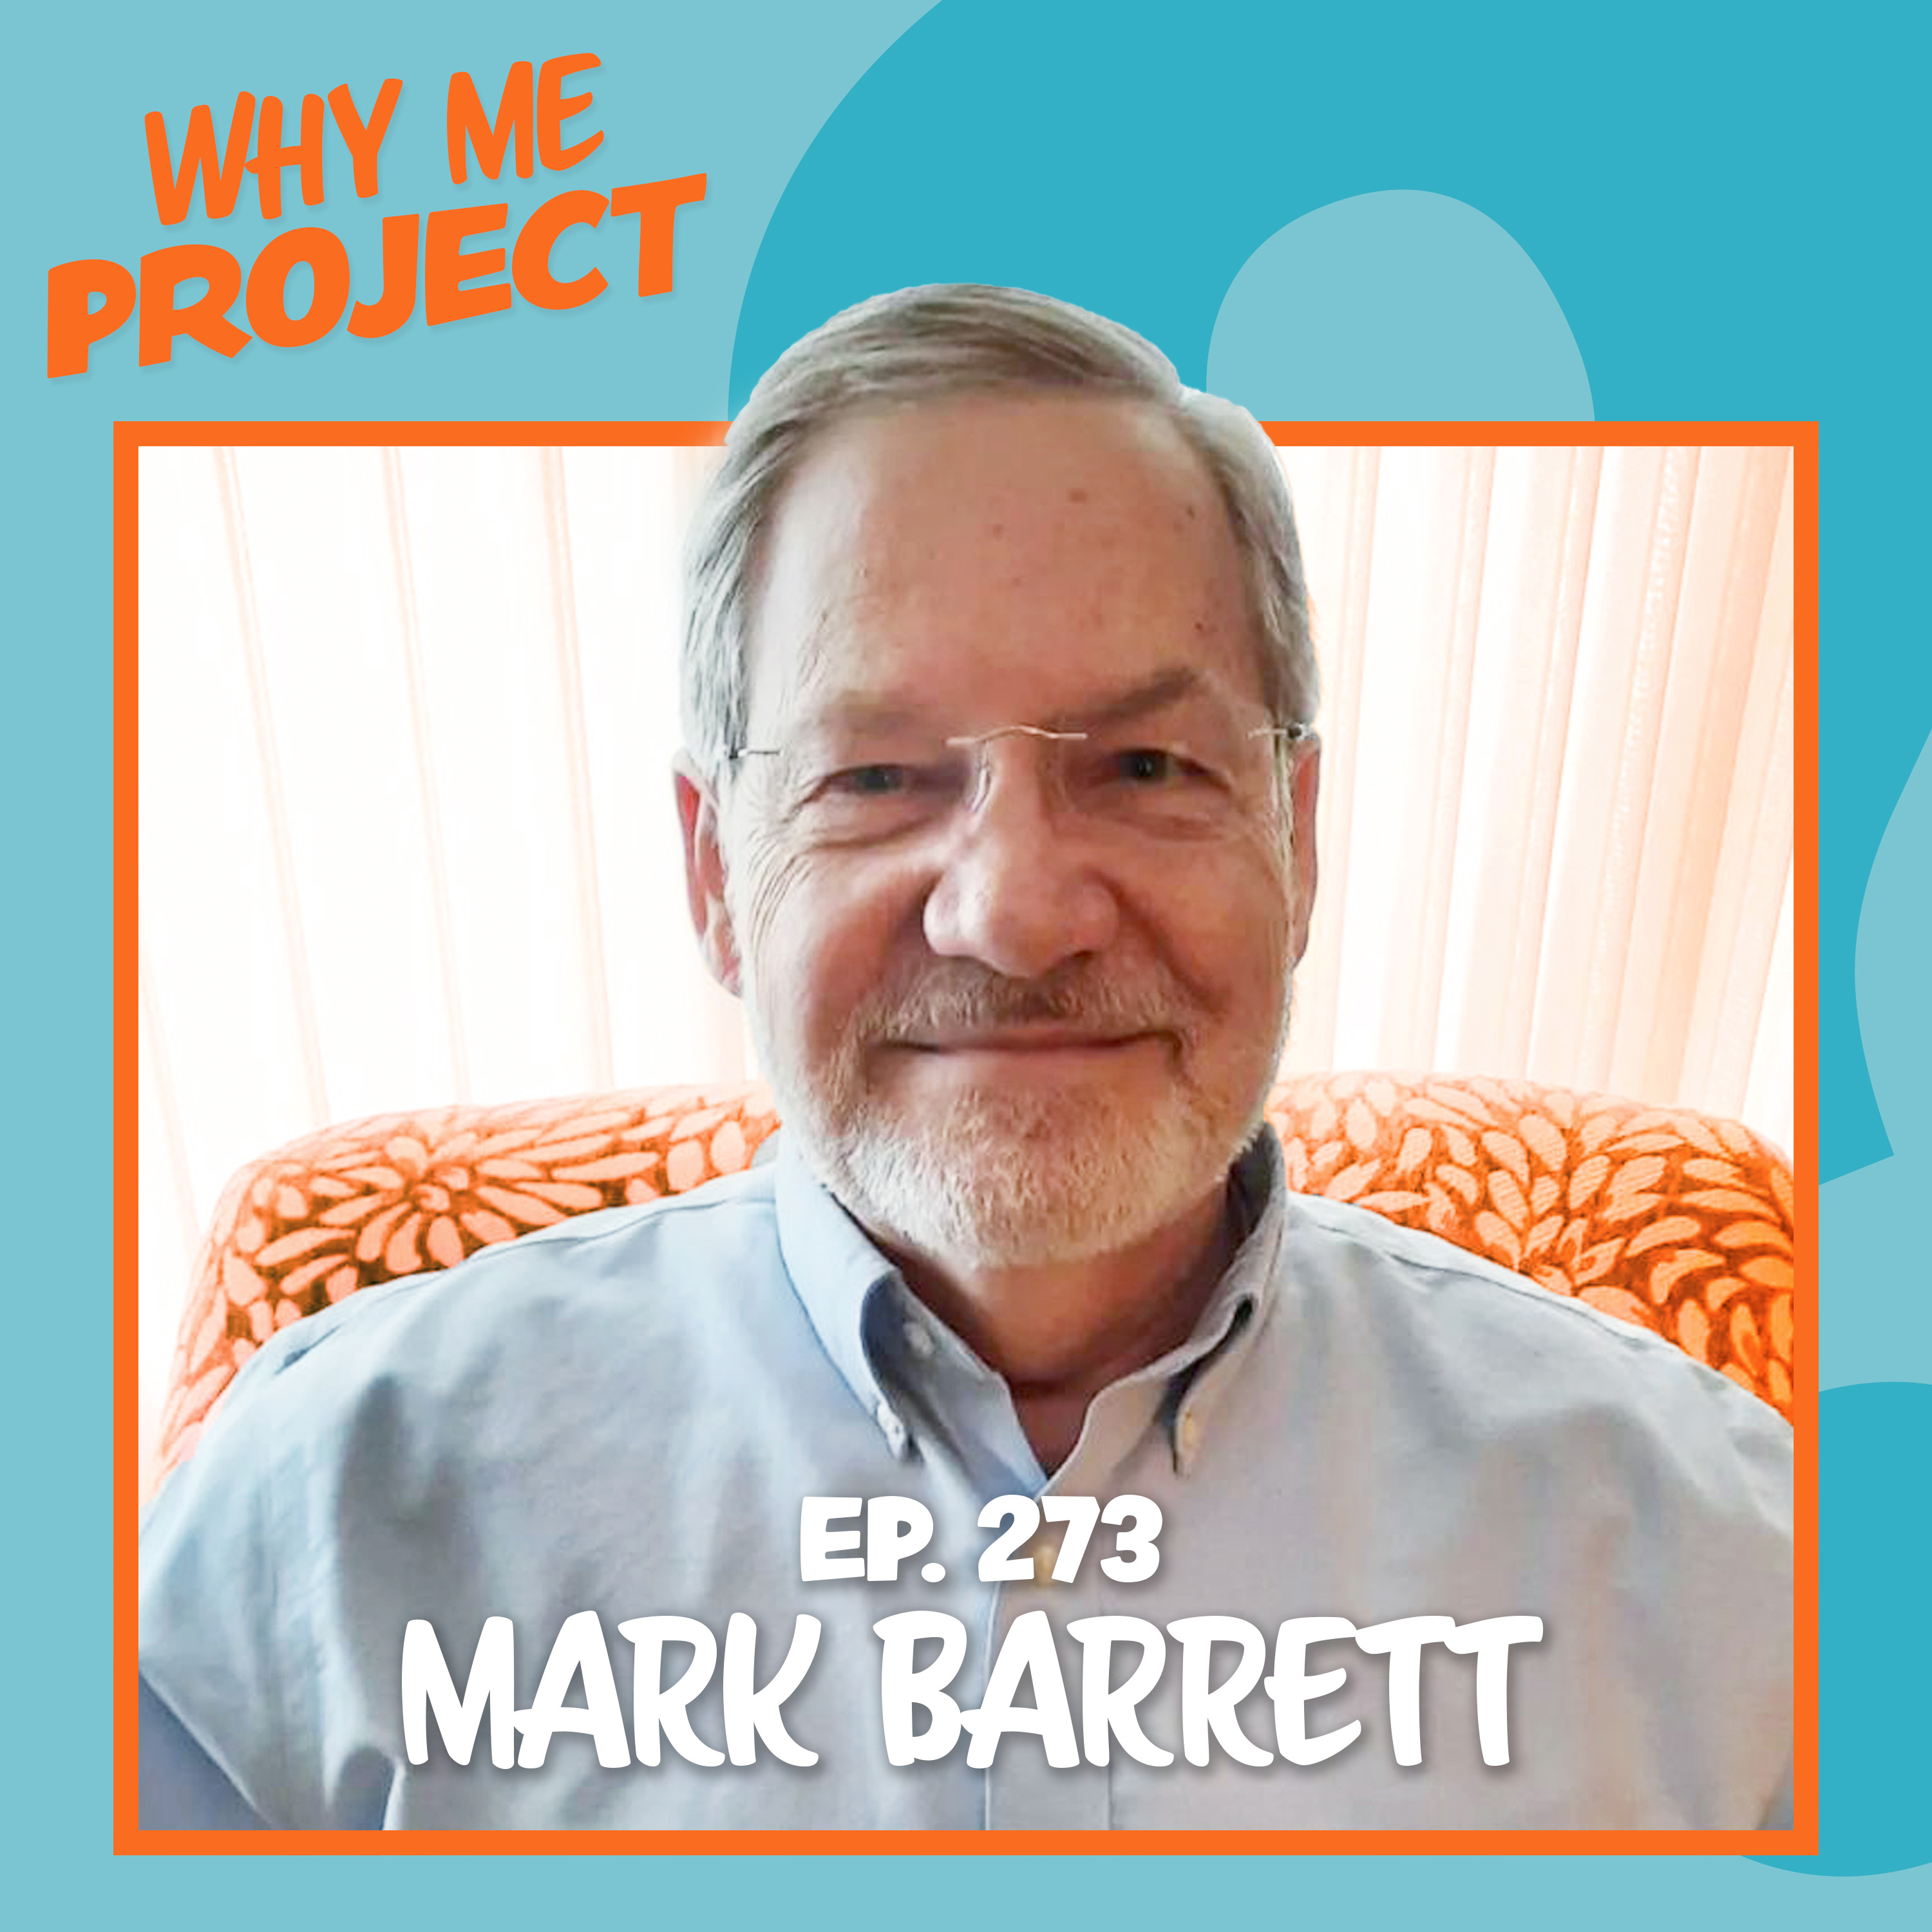 Mark Barrett